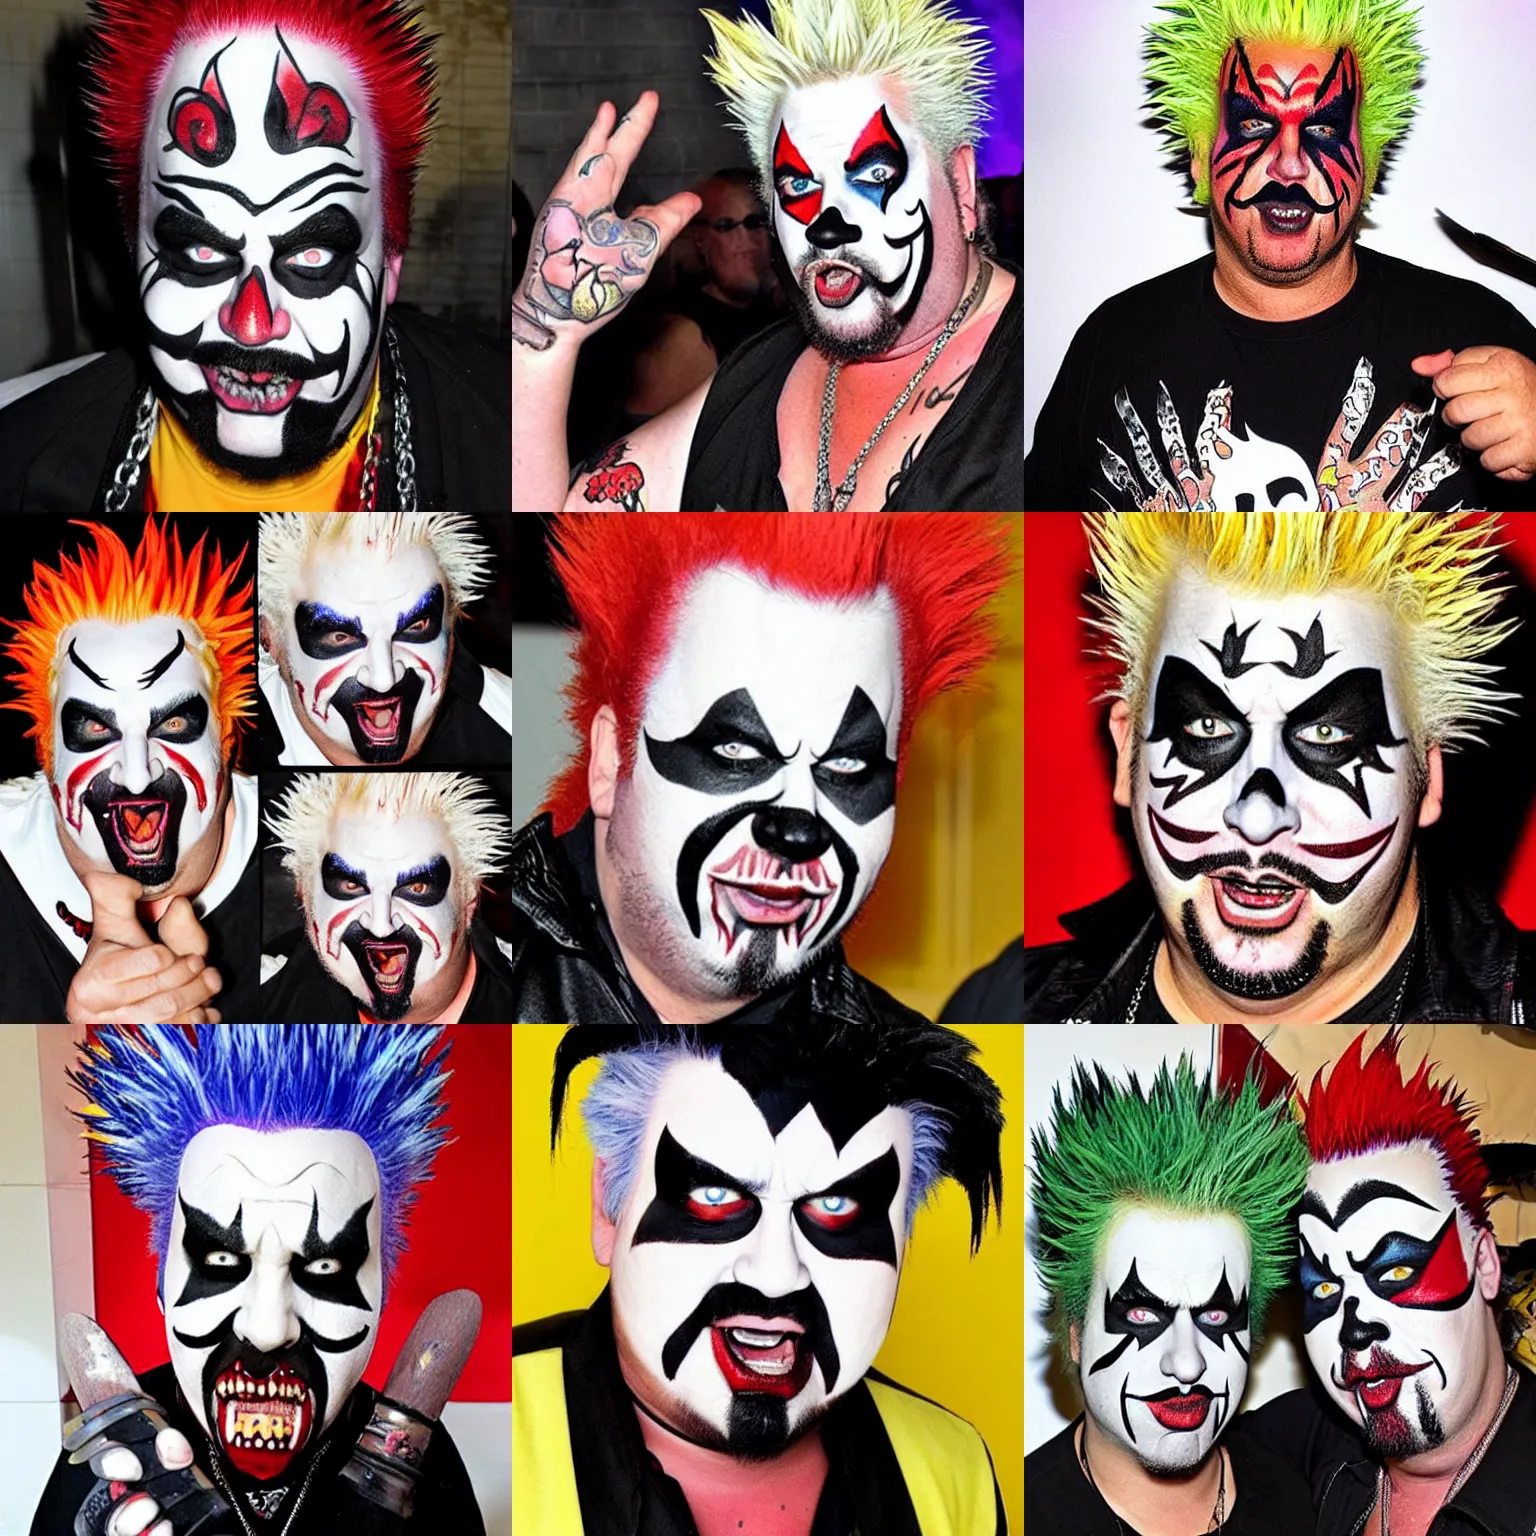 Prompt: Guy Fieri as a juggalo, Insane Clown Posse make-up